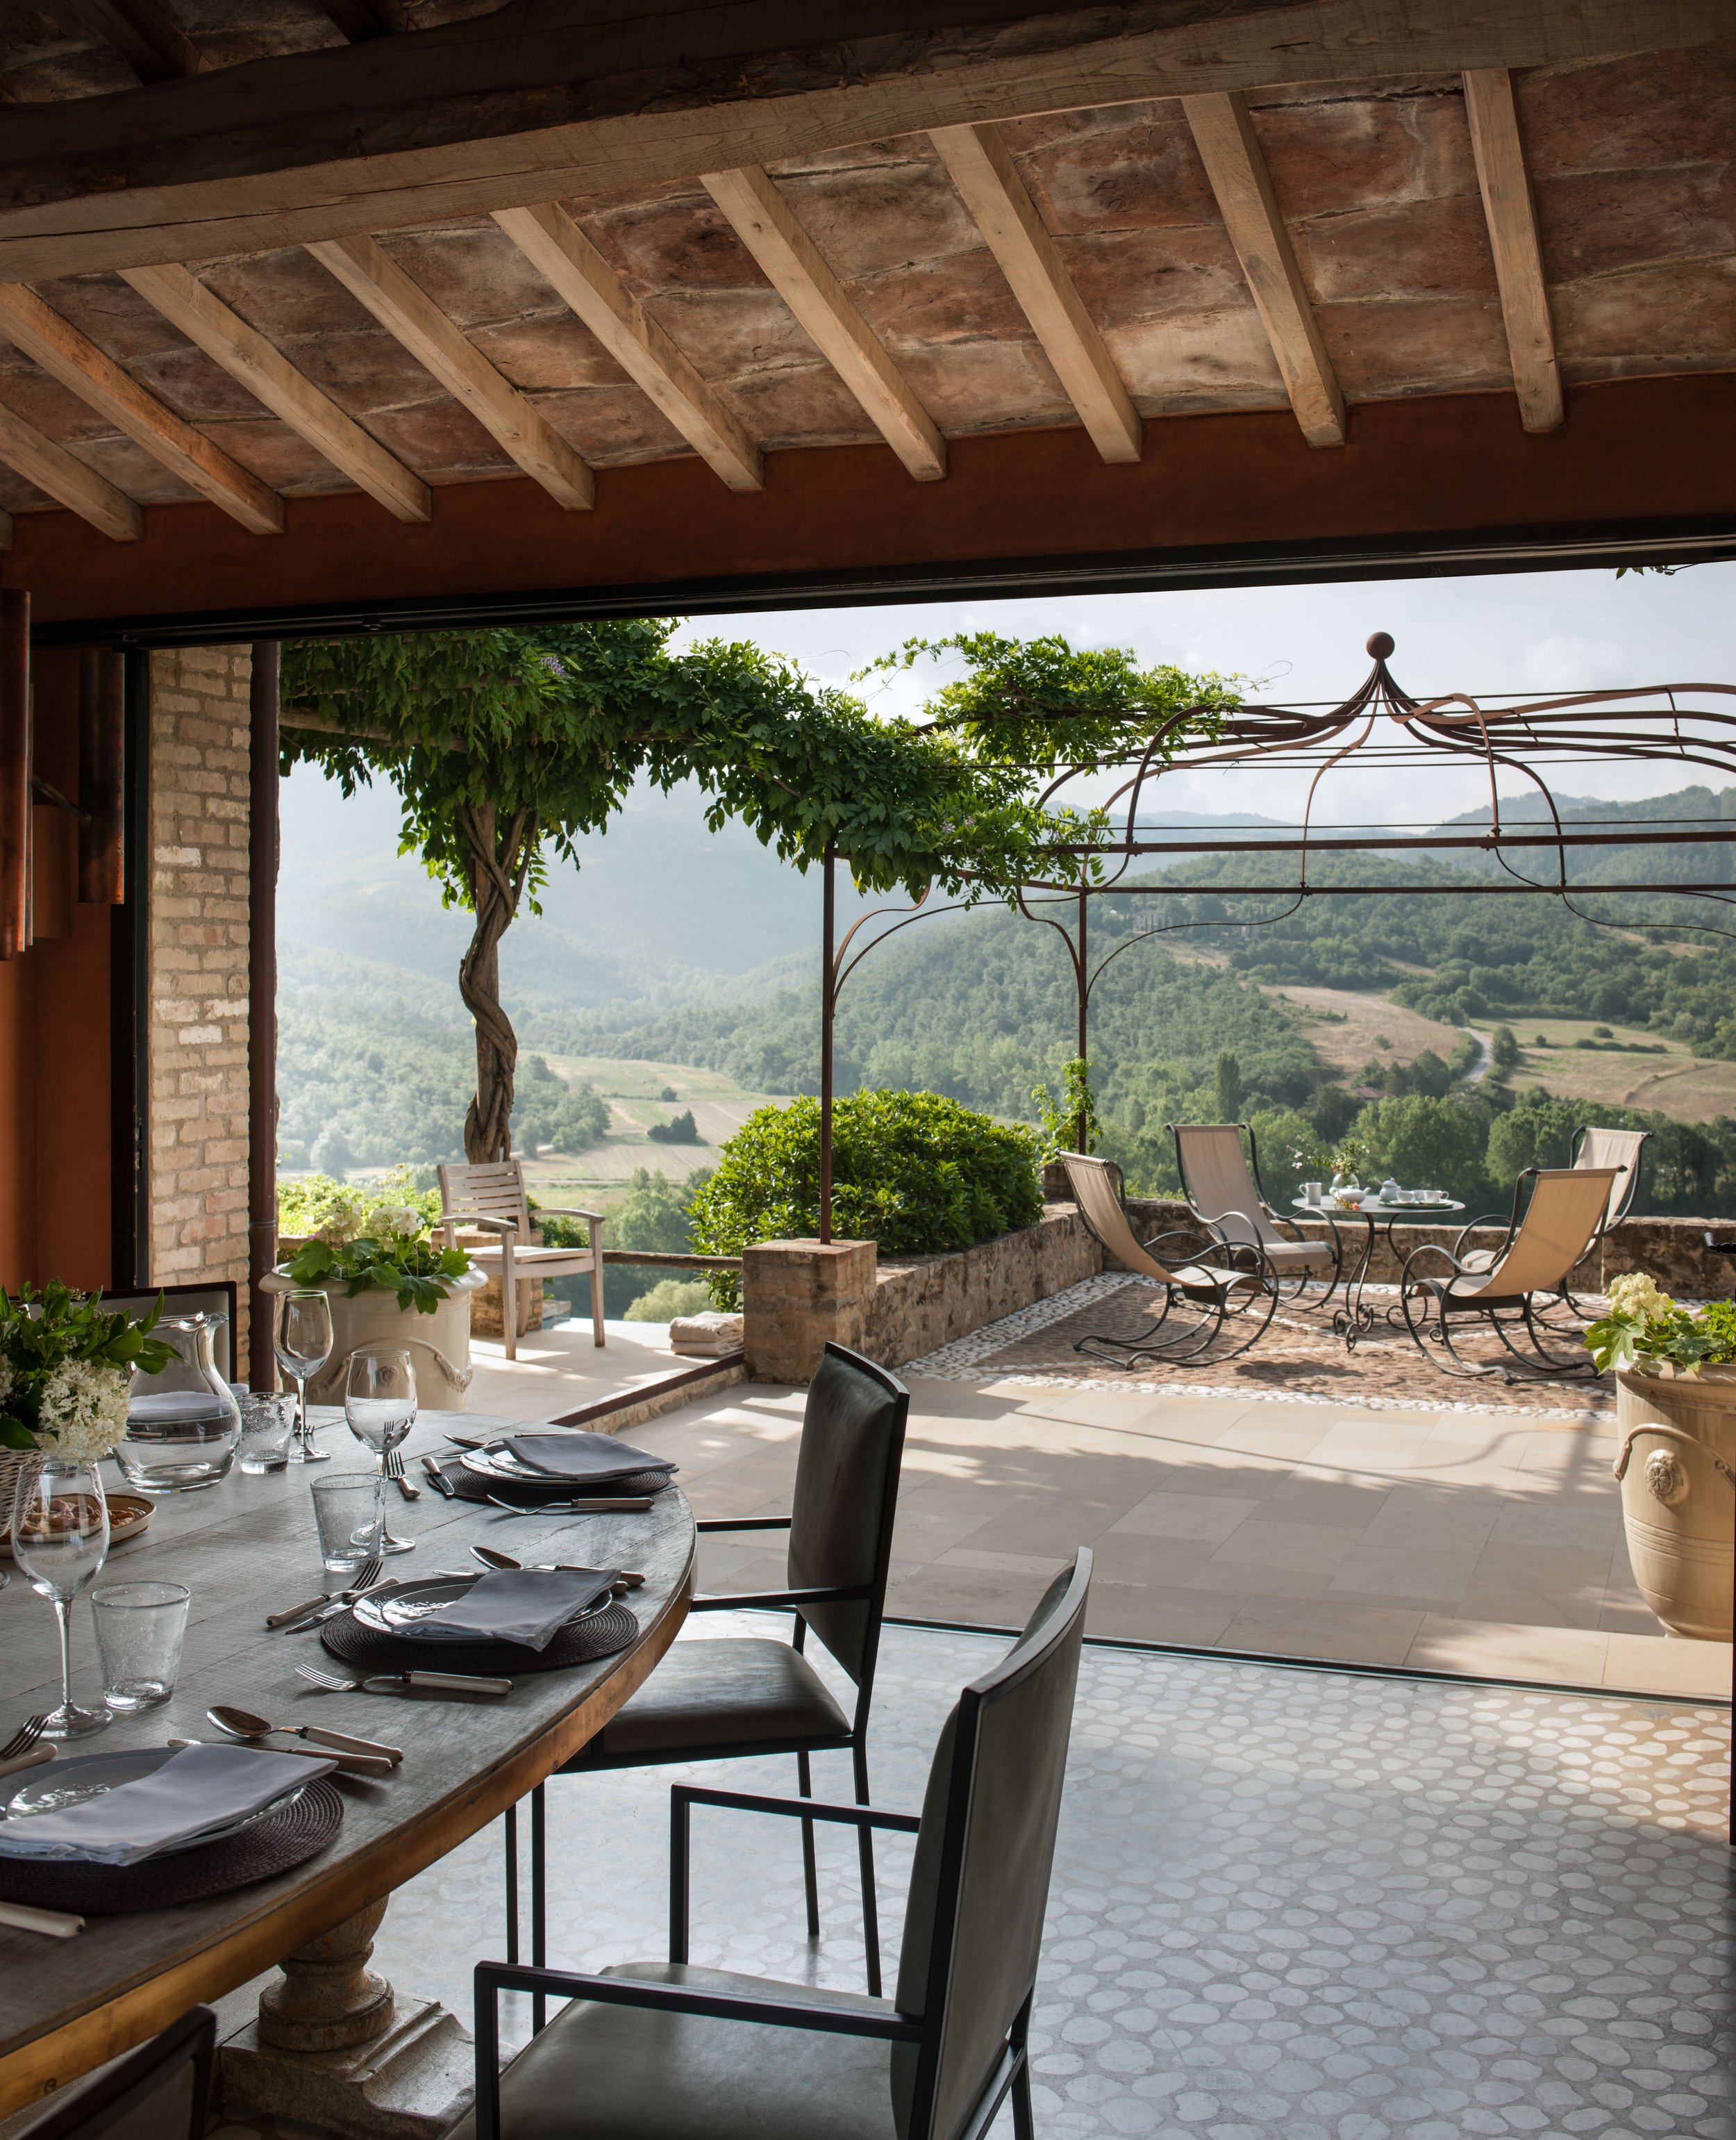 Francis York Exclusive Luxury Villa Rental in Umbria, Italy 8.jpg